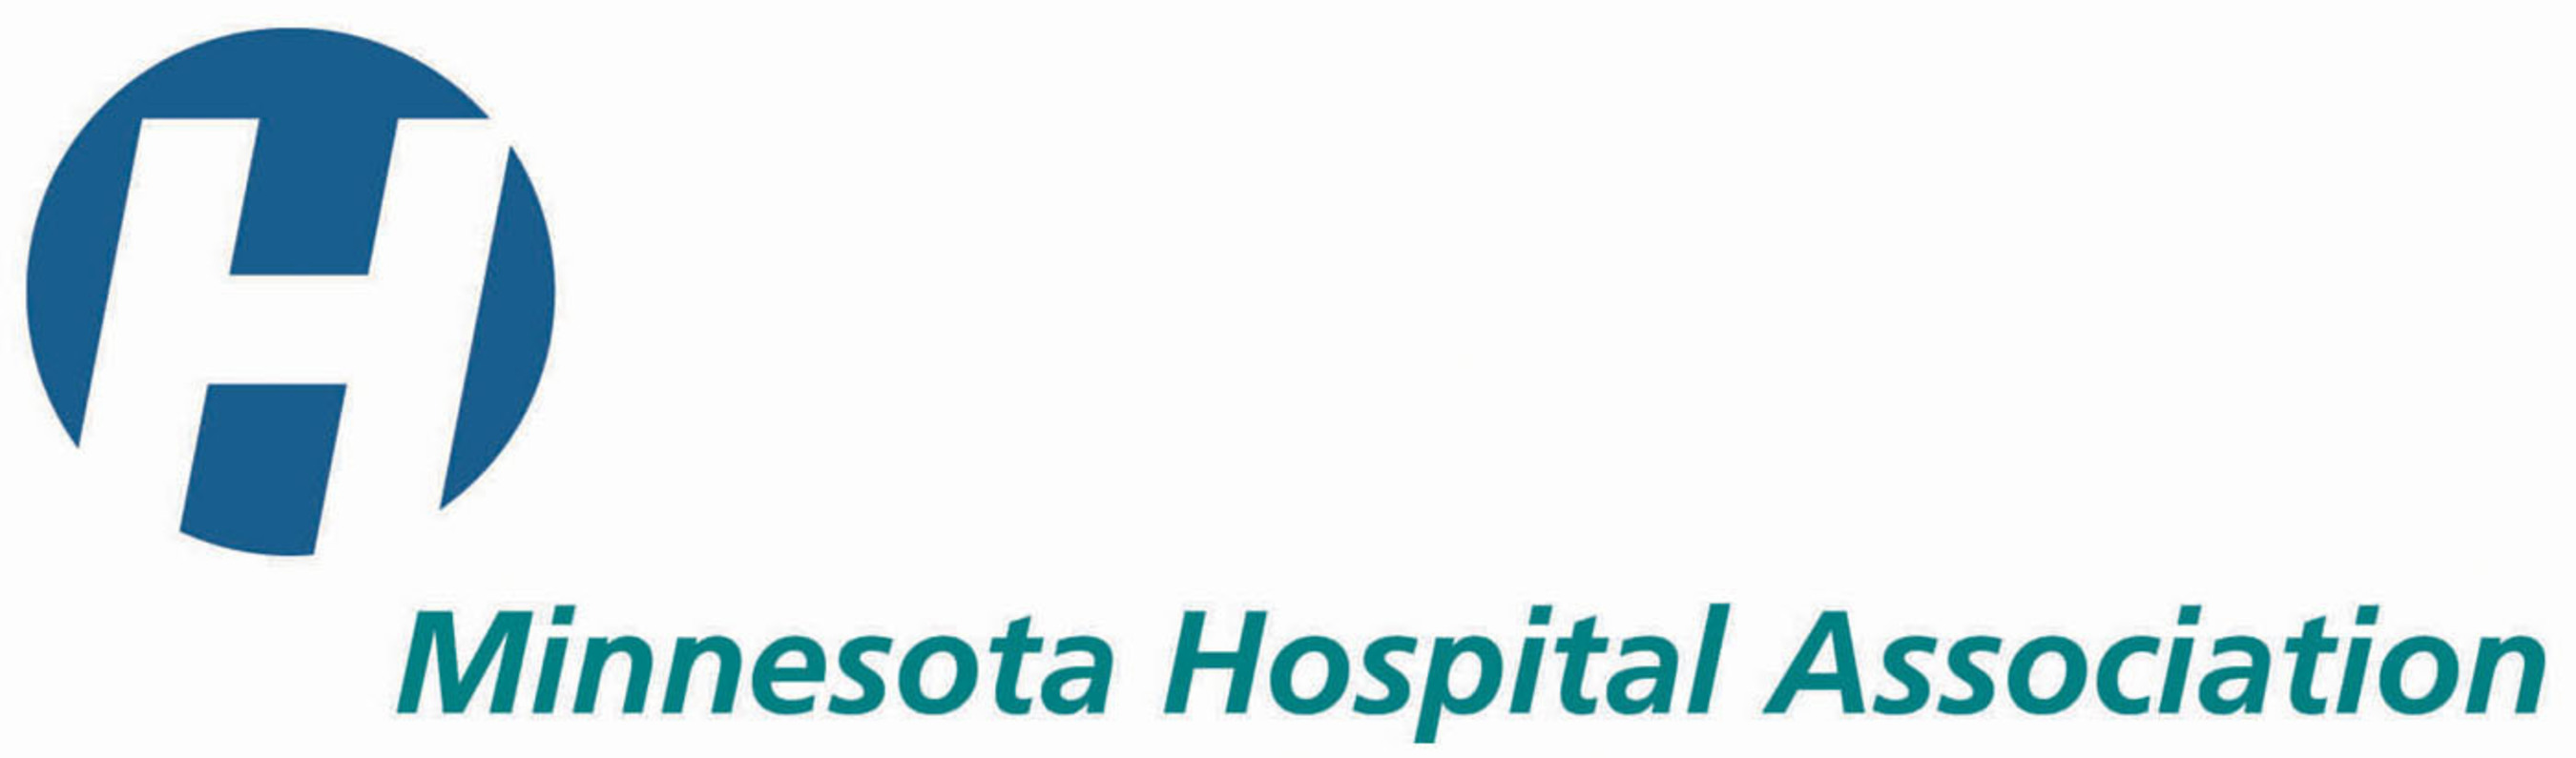 Minnesota Hospital Association logo. (PRNewsFoto/Minnesota Hospital Association) (PRNewsFoto/)